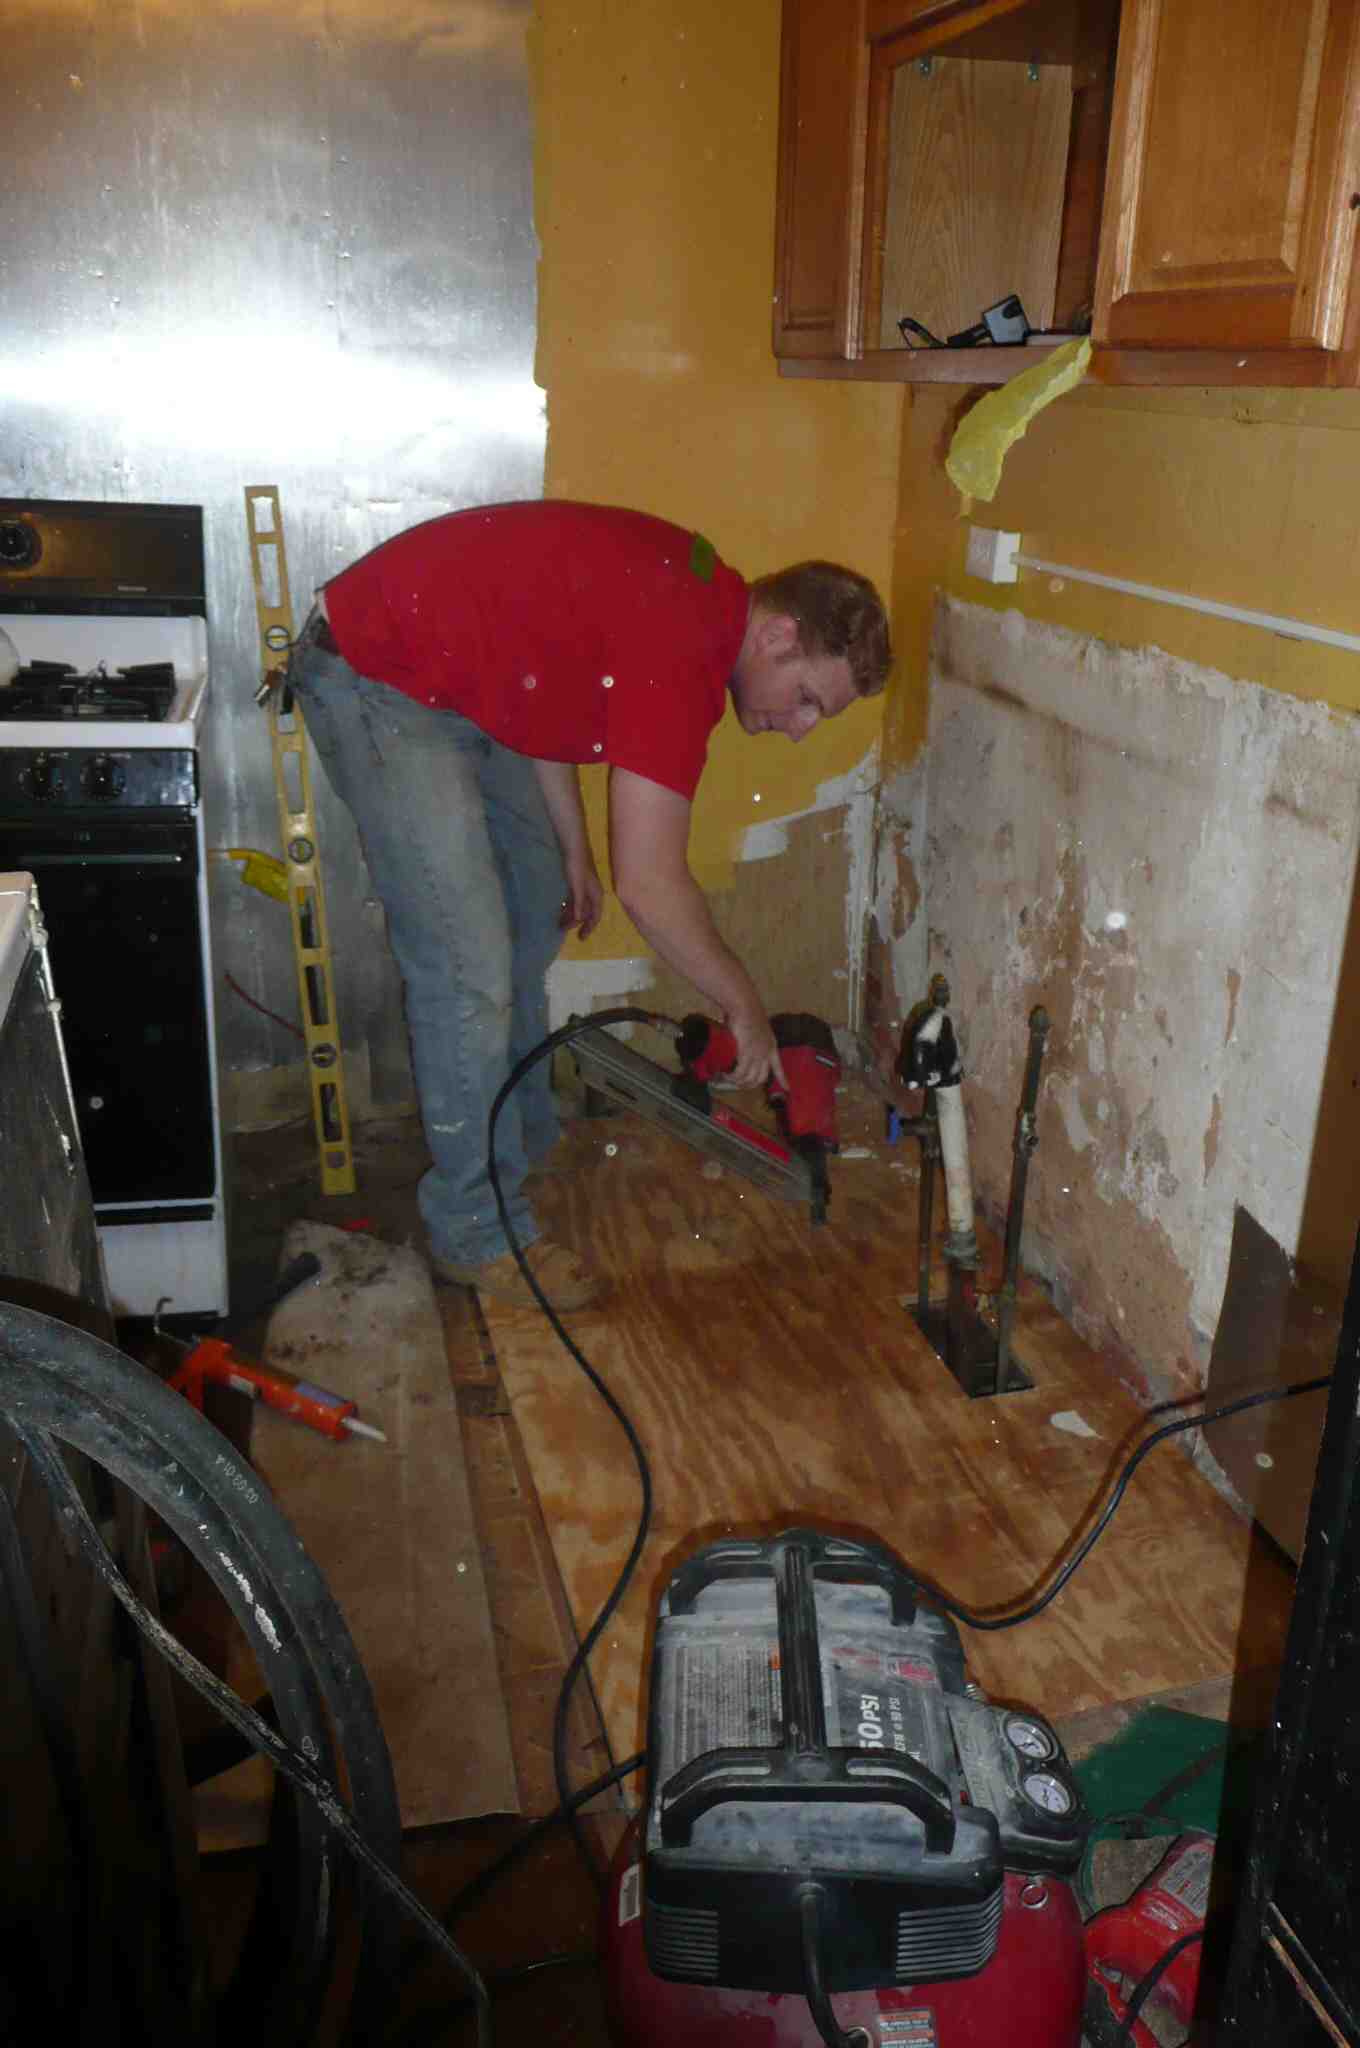 A Rebuilding Together volunteer worked on renovating a homeowner’s kitchen. | Philadelphia Neighborhoods